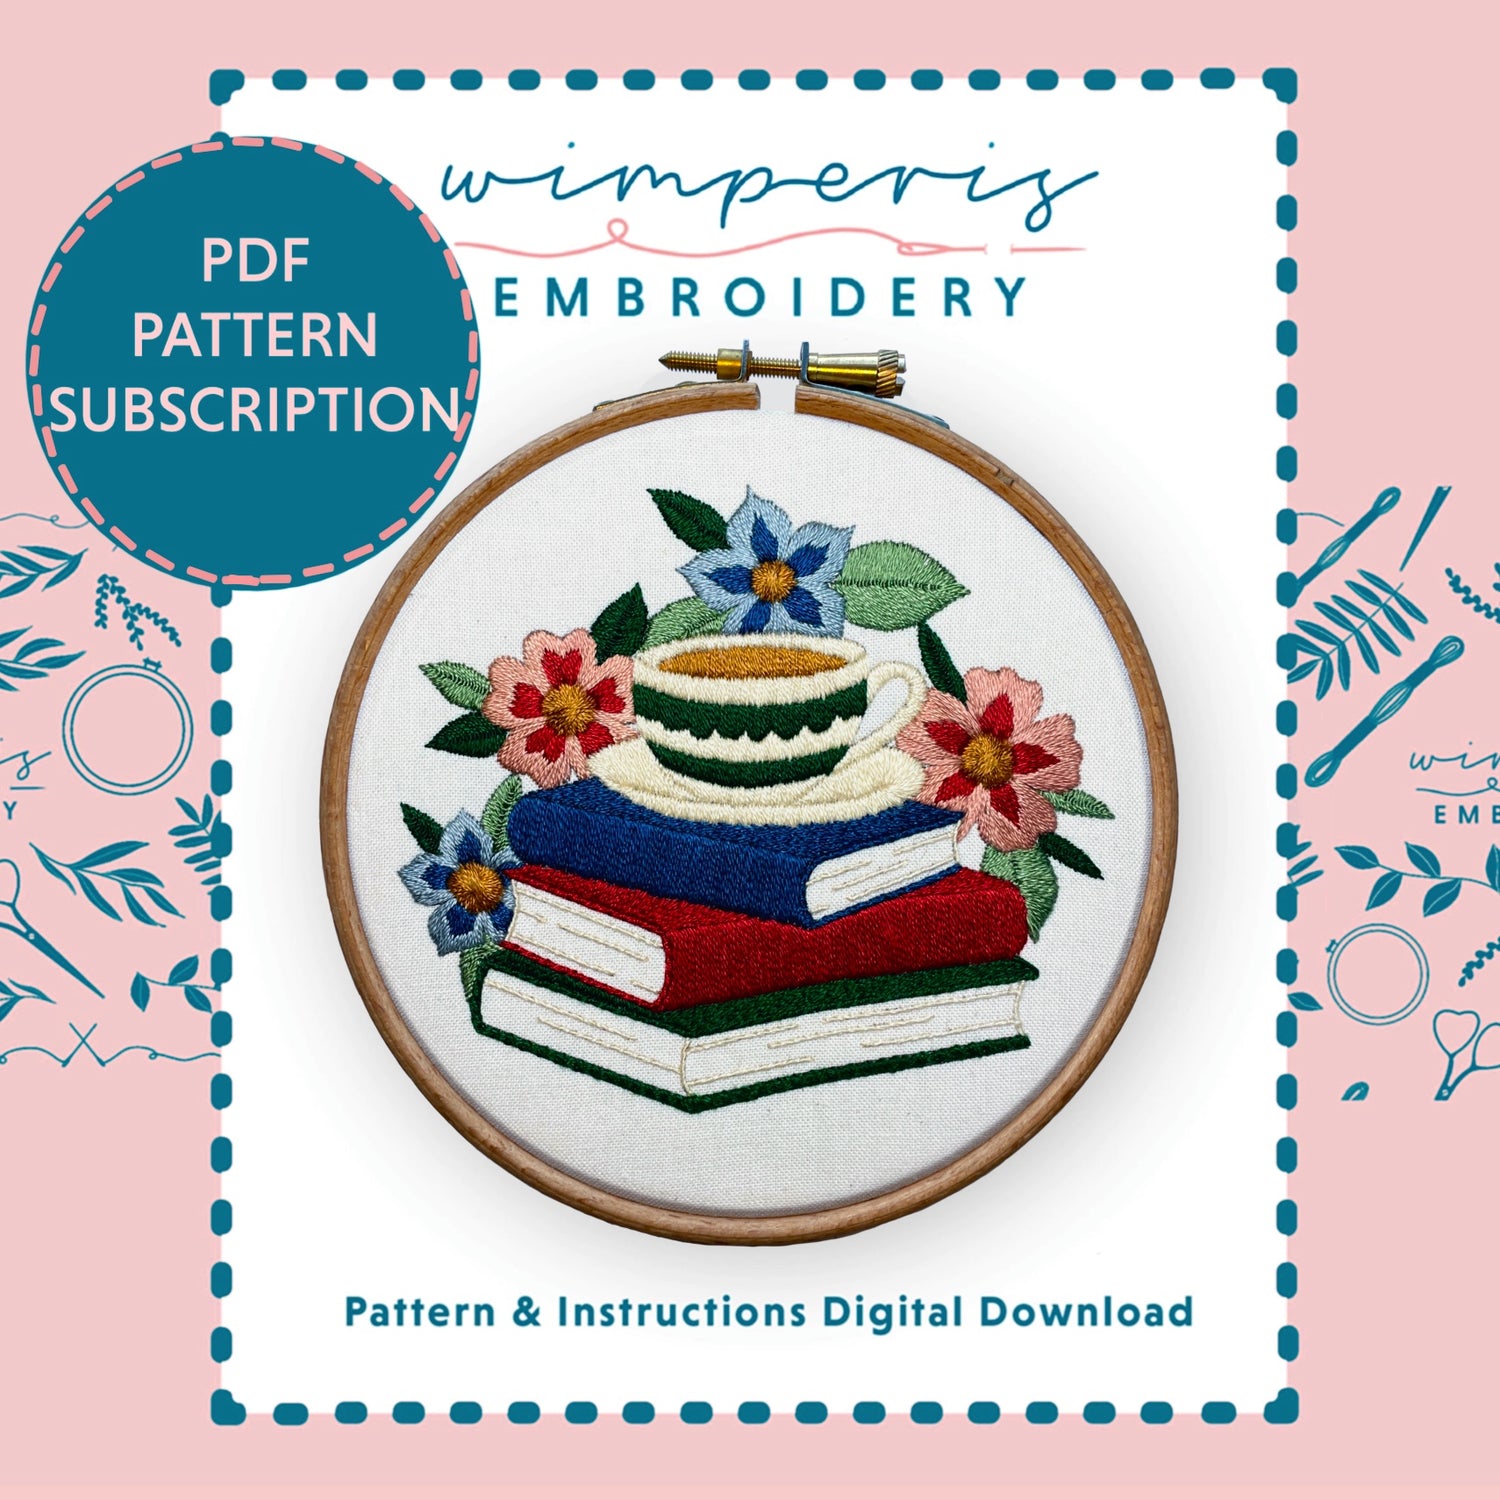 PDF Embroidery Patterns